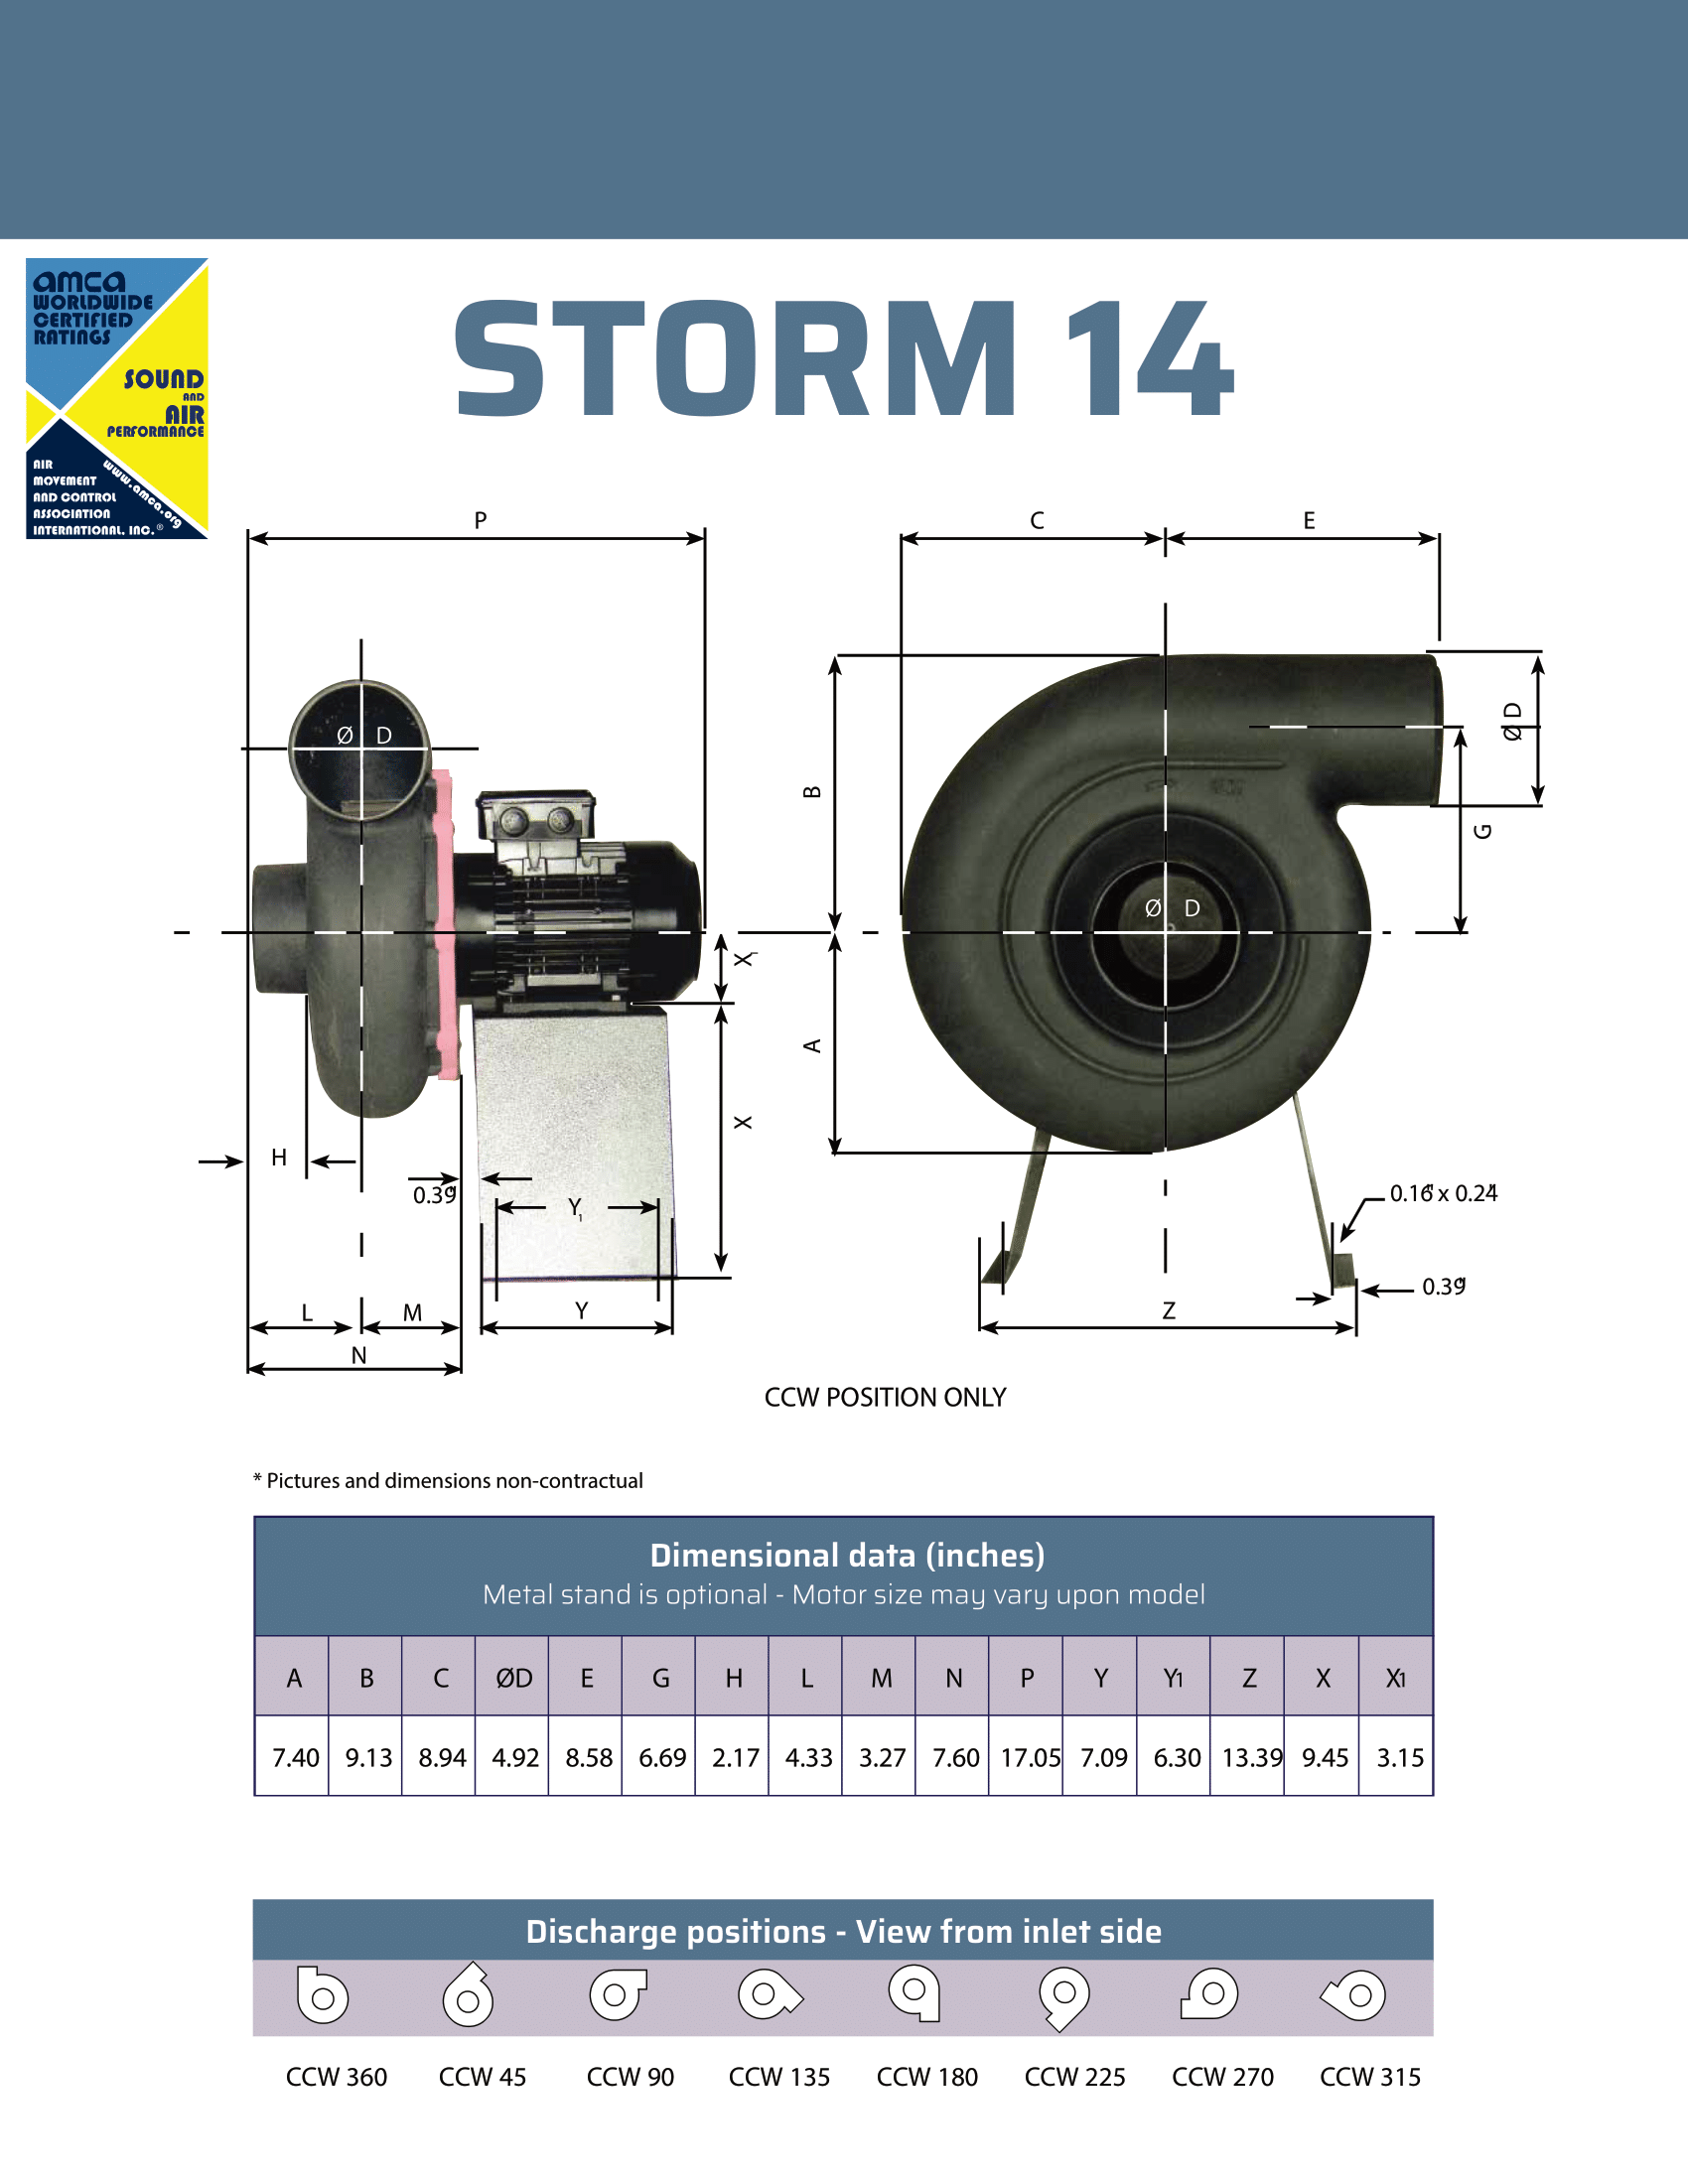 Specs sheet for Storm 14 Polypropylene Blower and ventilation fan